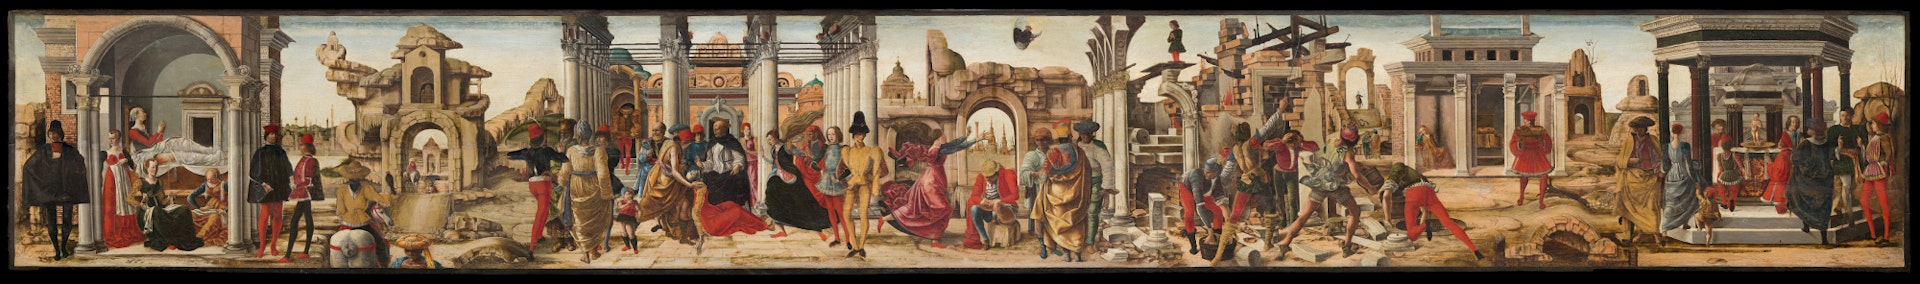 09_Storie di San Vincenzo Ferrer_Ercole de' Roberti_ Pinacoteca Vaticana,Roma (1).jpg